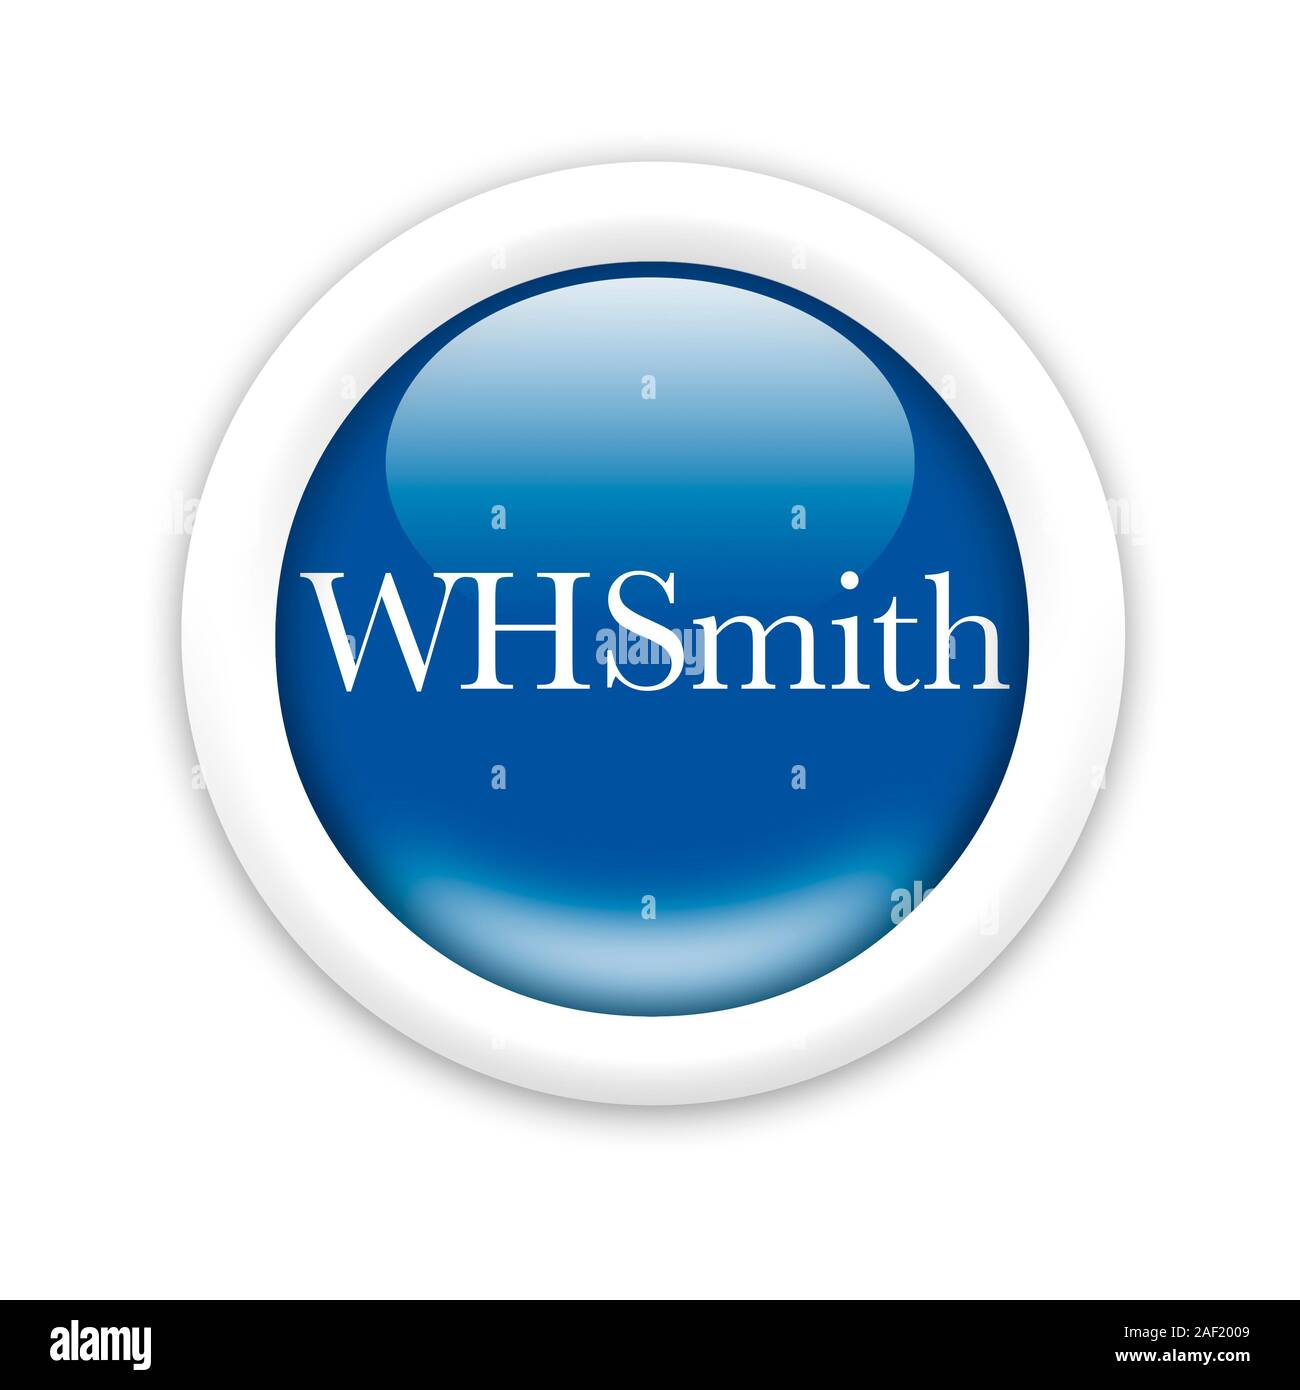 WH Smith logo Stock Photo - Alamy